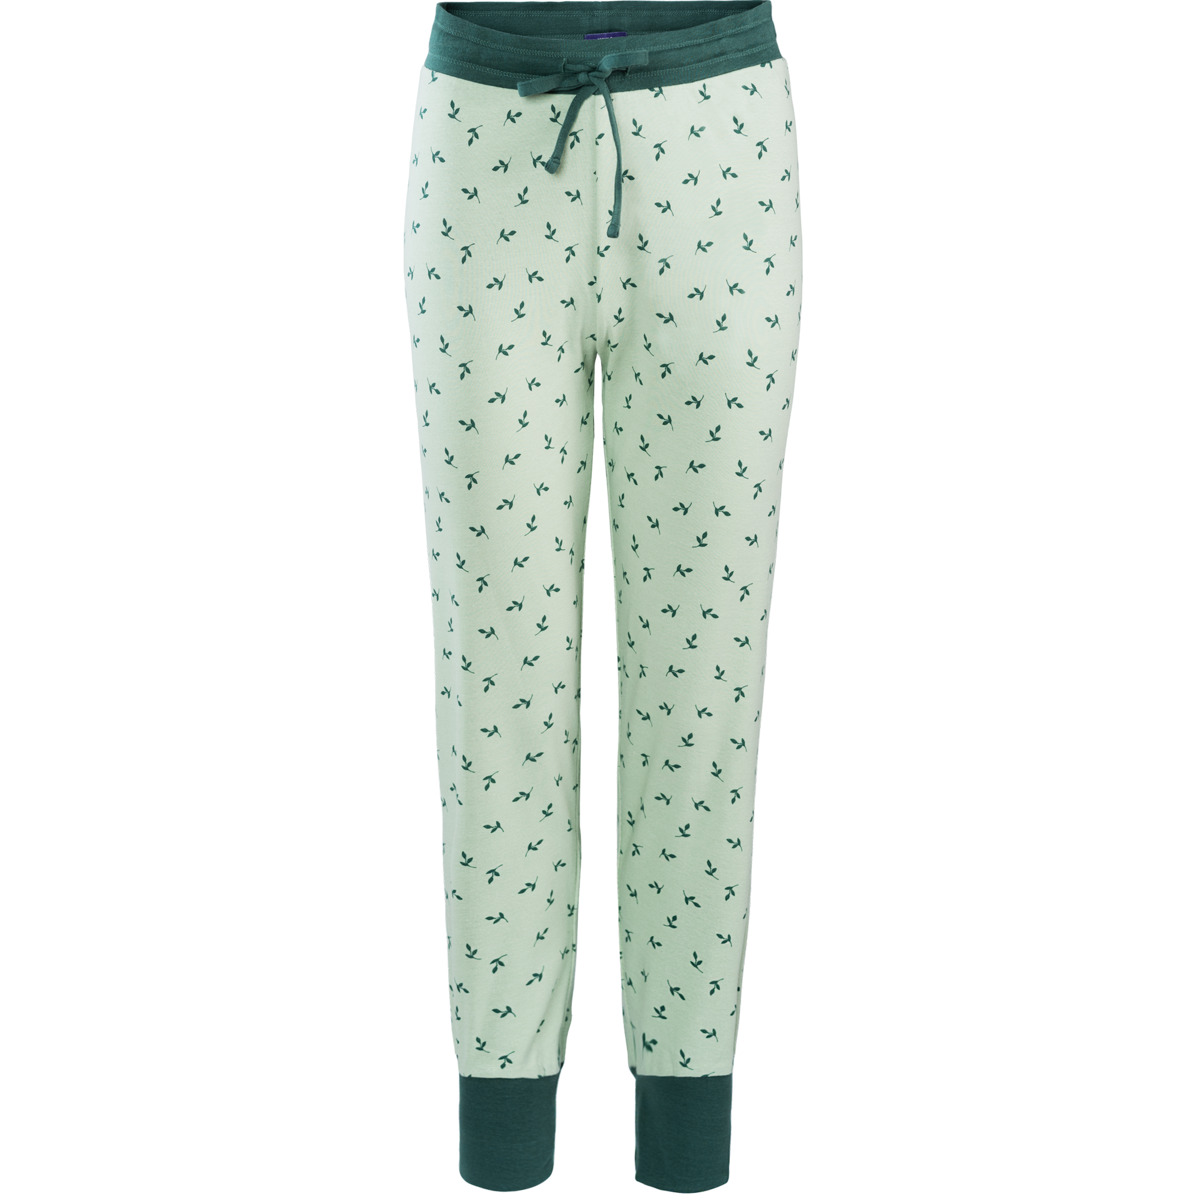 Pattern Sleep trousers, AVELINE